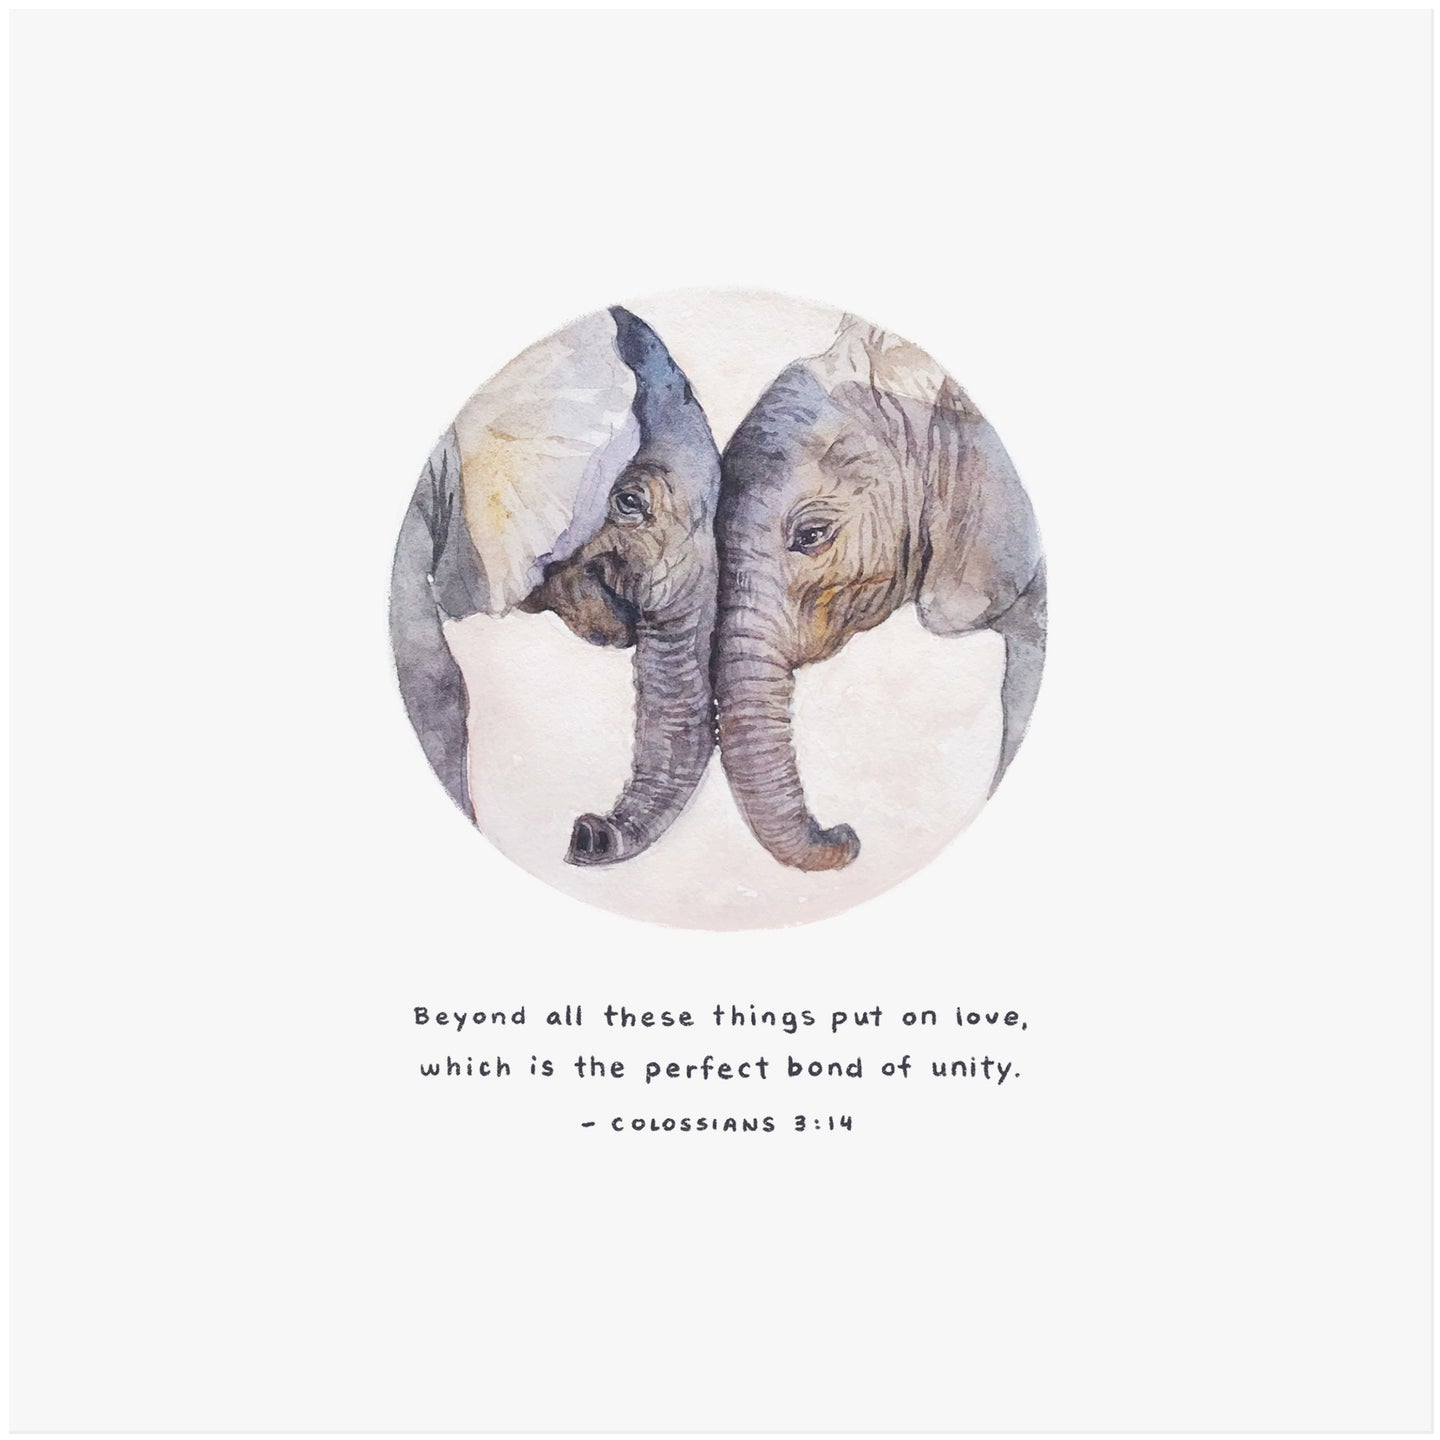 Colossians 3:14 Artwork of two elephants - 